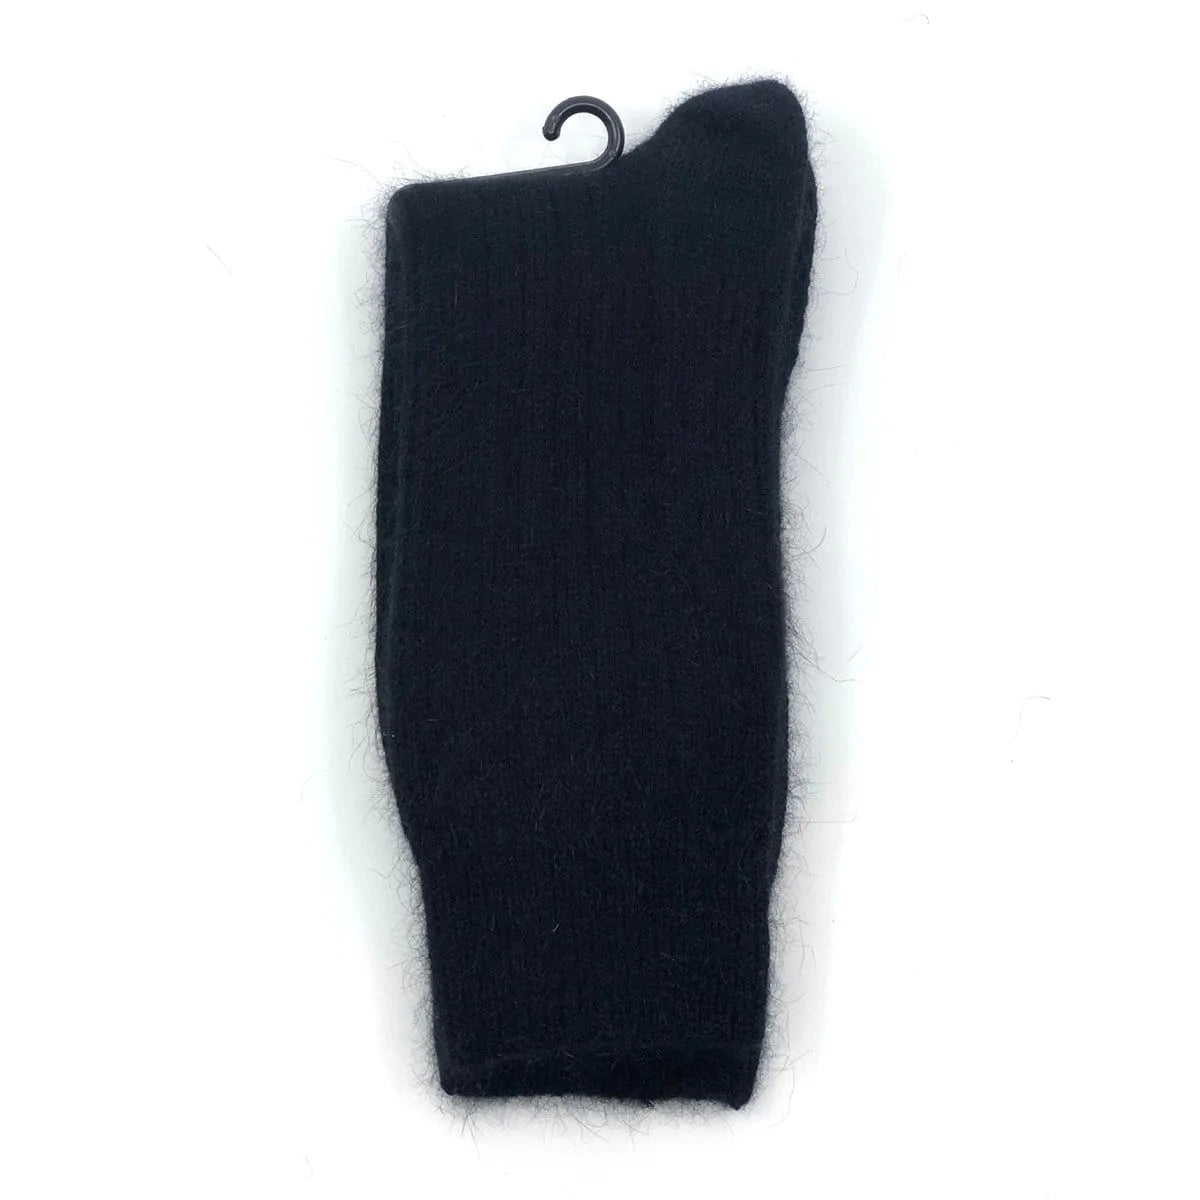 Accessories - Premium Possum and Merino Wool Ribbed Socks - Original UGG Australia Classic